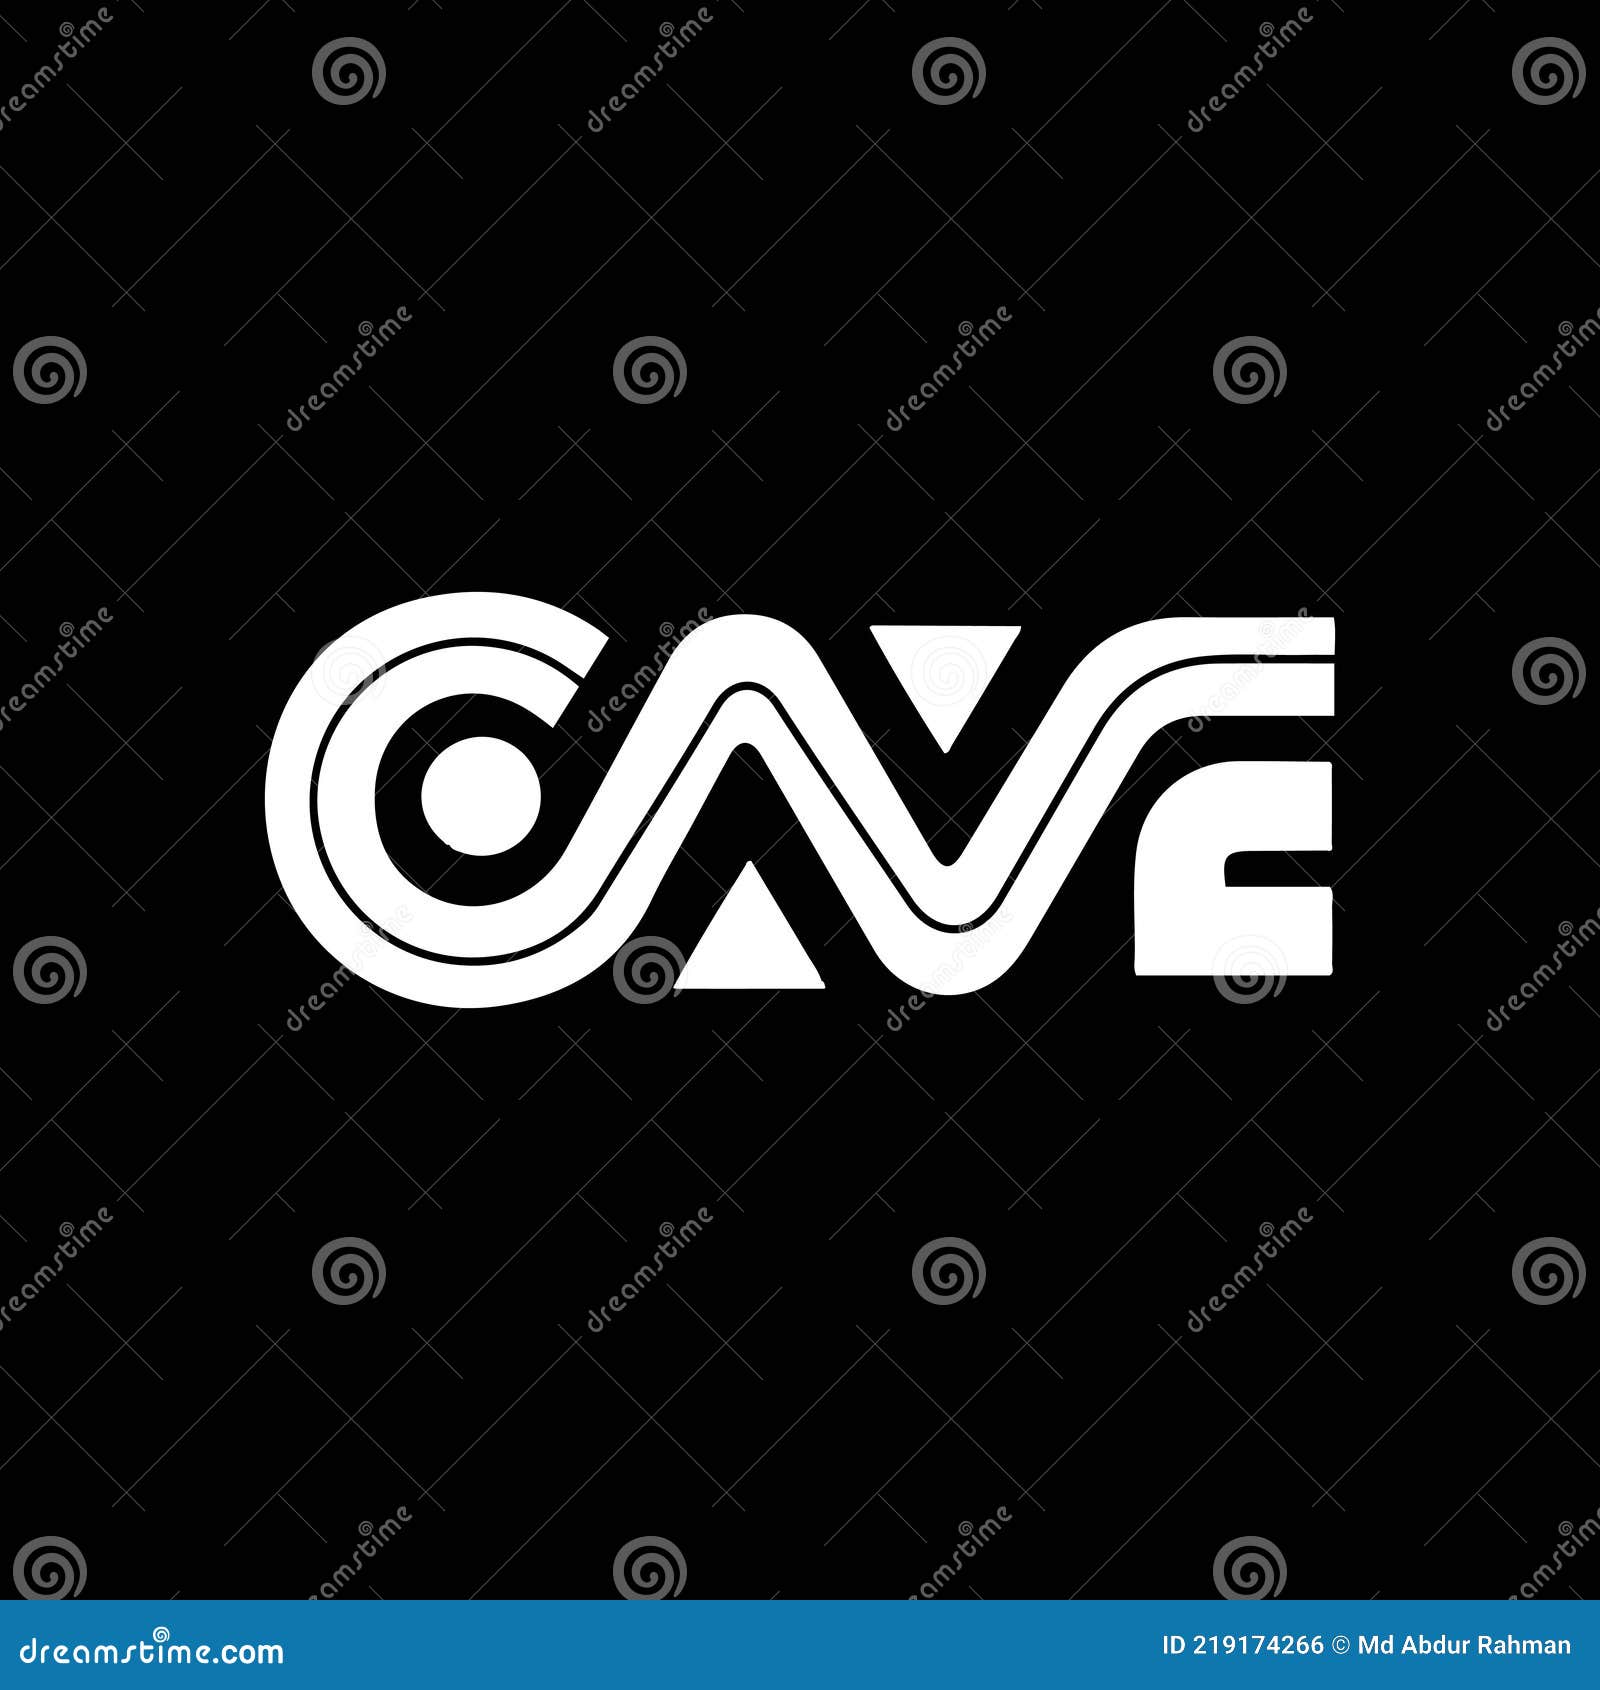 cae letter logo  on black background. cae creative initials letter logo concept. cae letter 